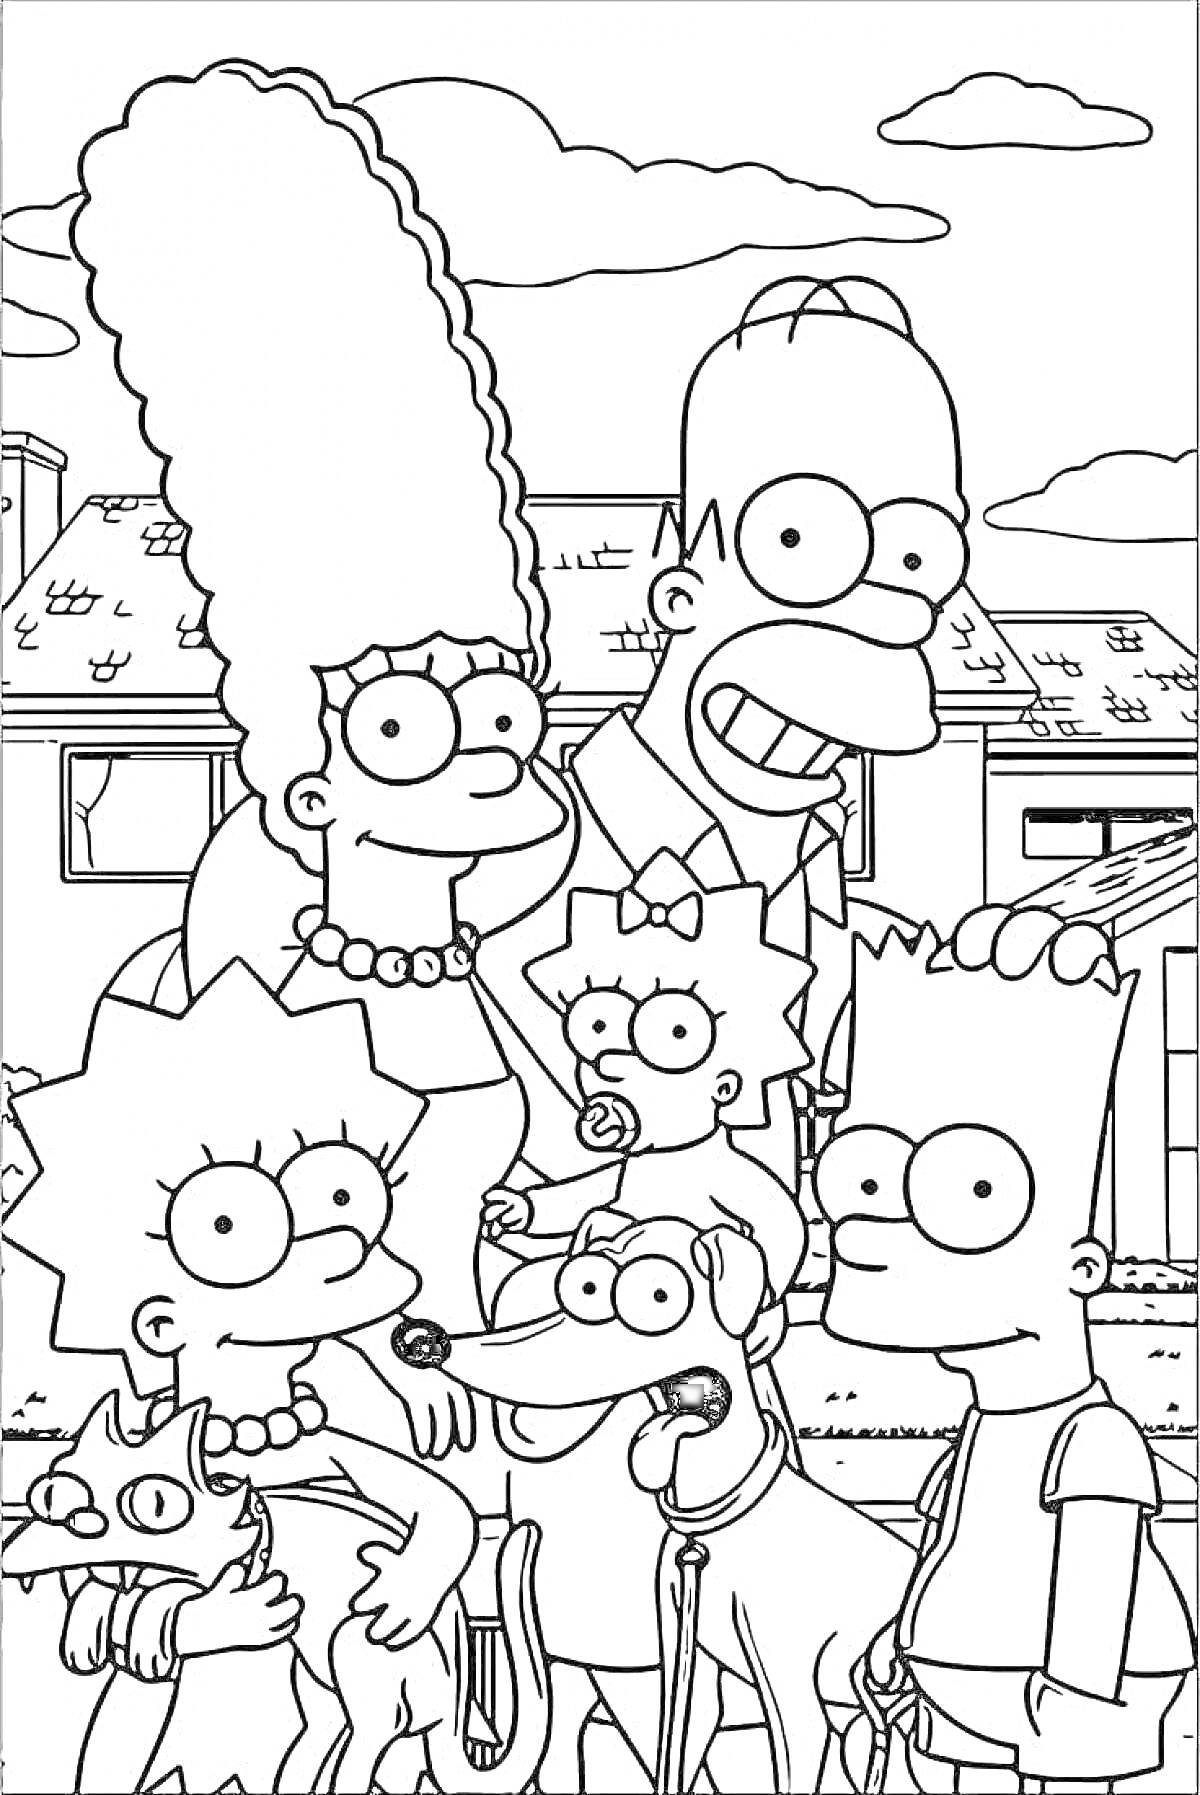 Семья Симпсонов на фоне дома, включая Мардж, Гомера, Лизу, Мэгги, Барта, Санта Литл Хелпера и Снежинку